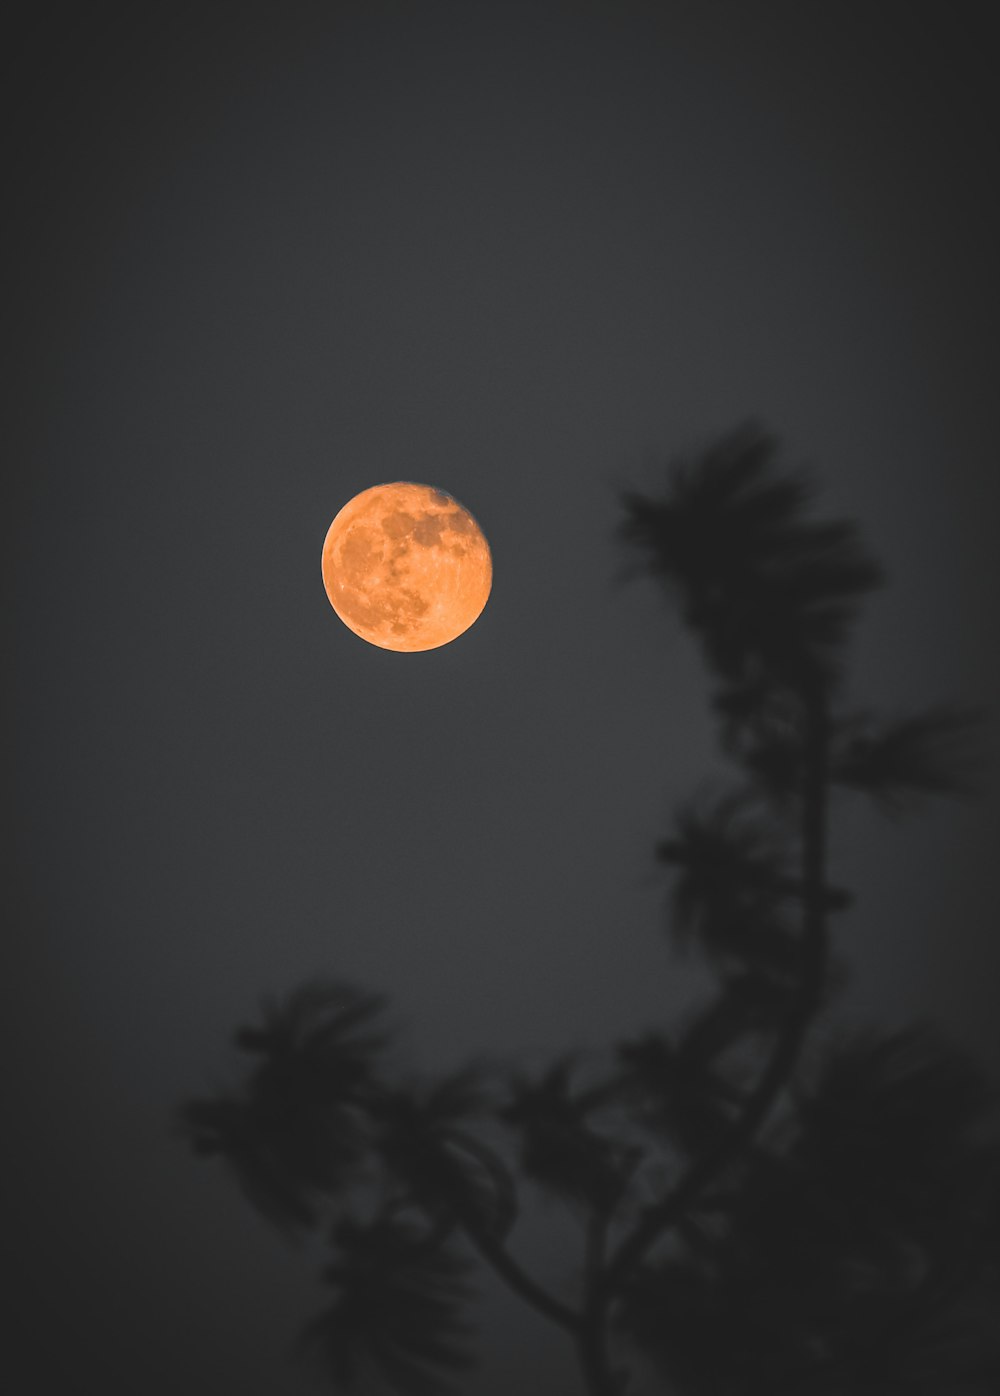 full moon in the night sky